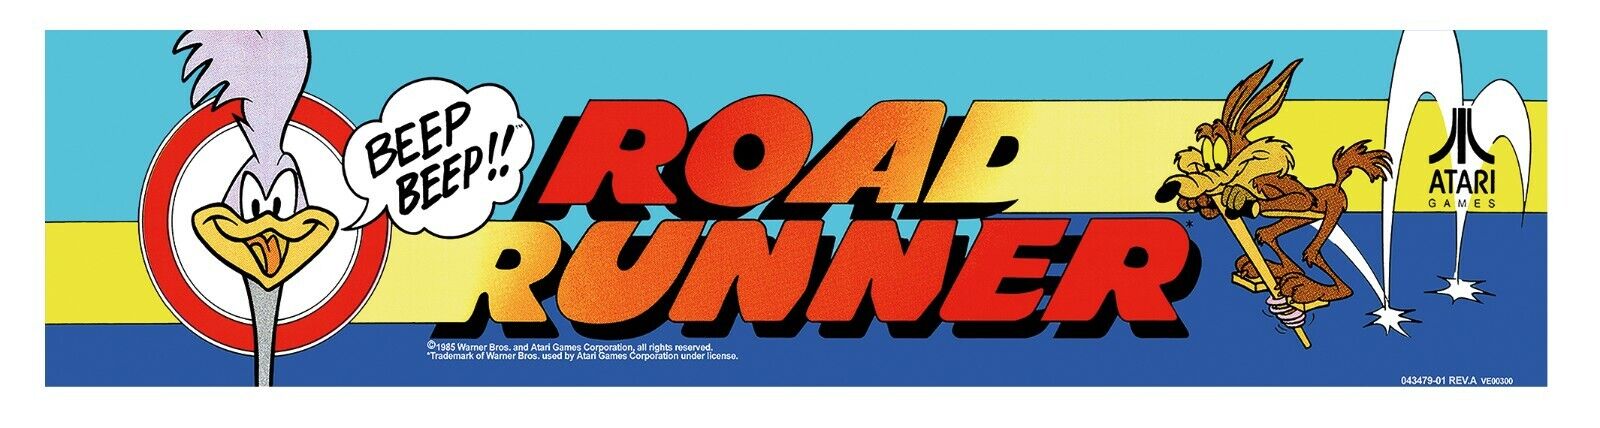 Road Runner Atari Arcade Marquee Header/Backlit Sign 